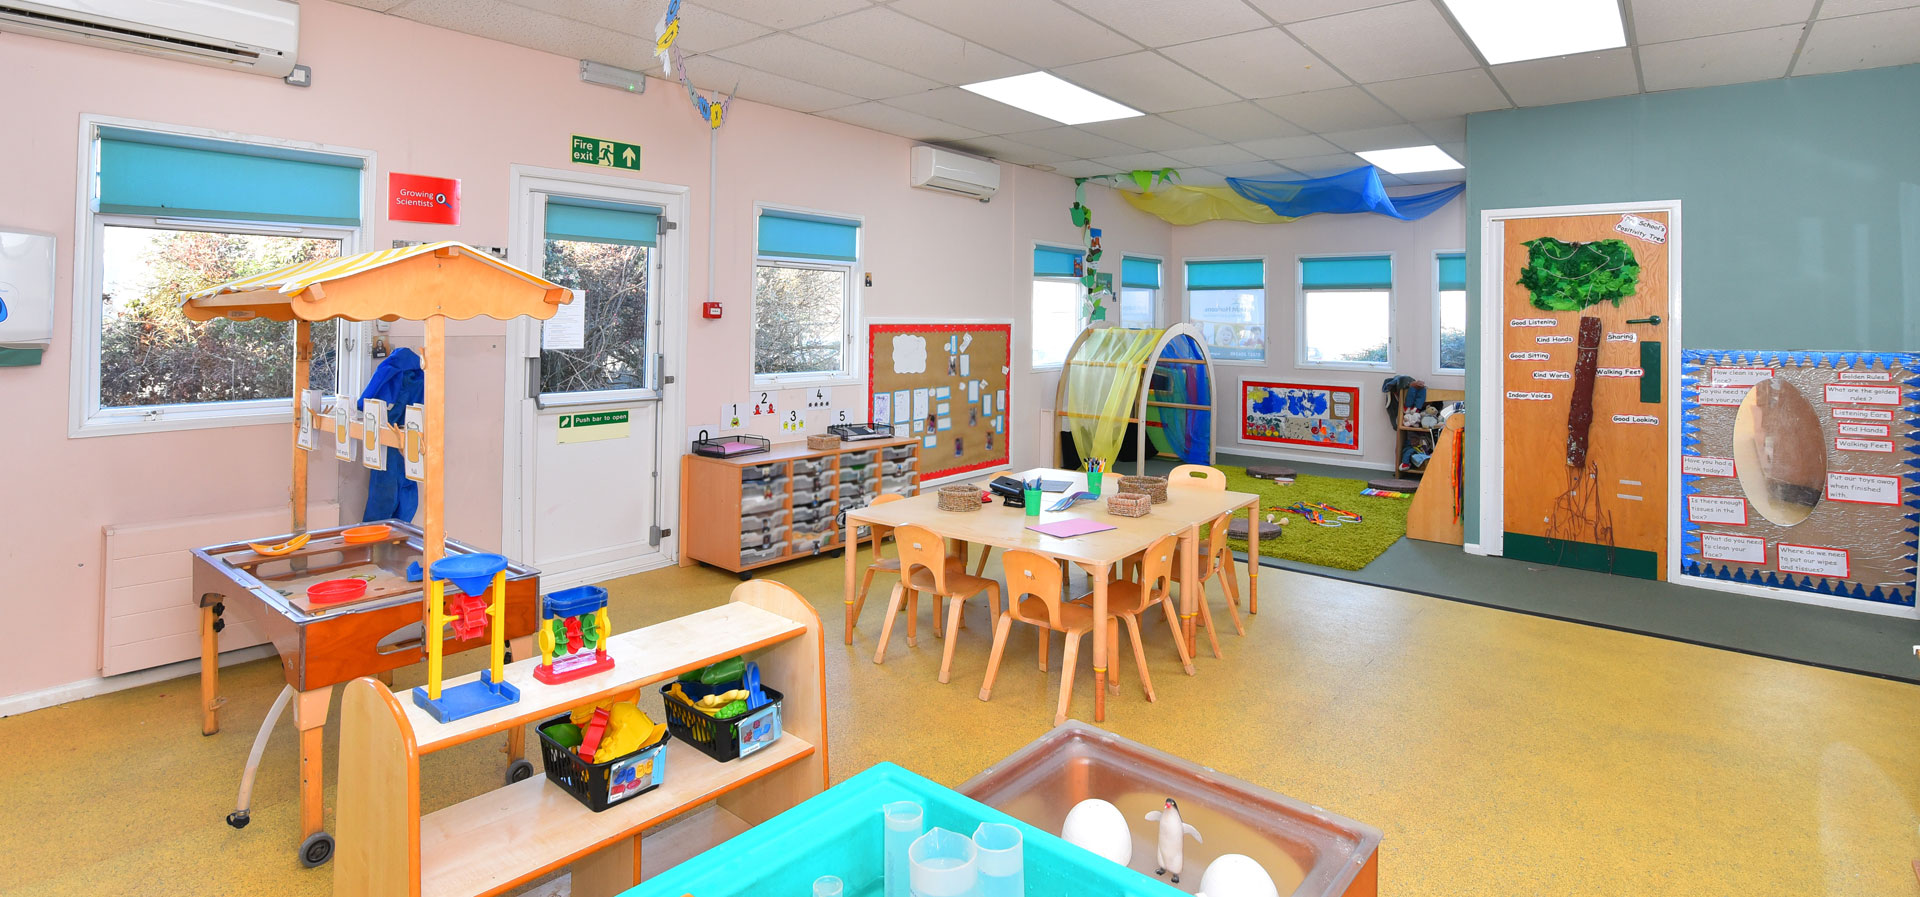 Canterbury Day Nursery and Preschool